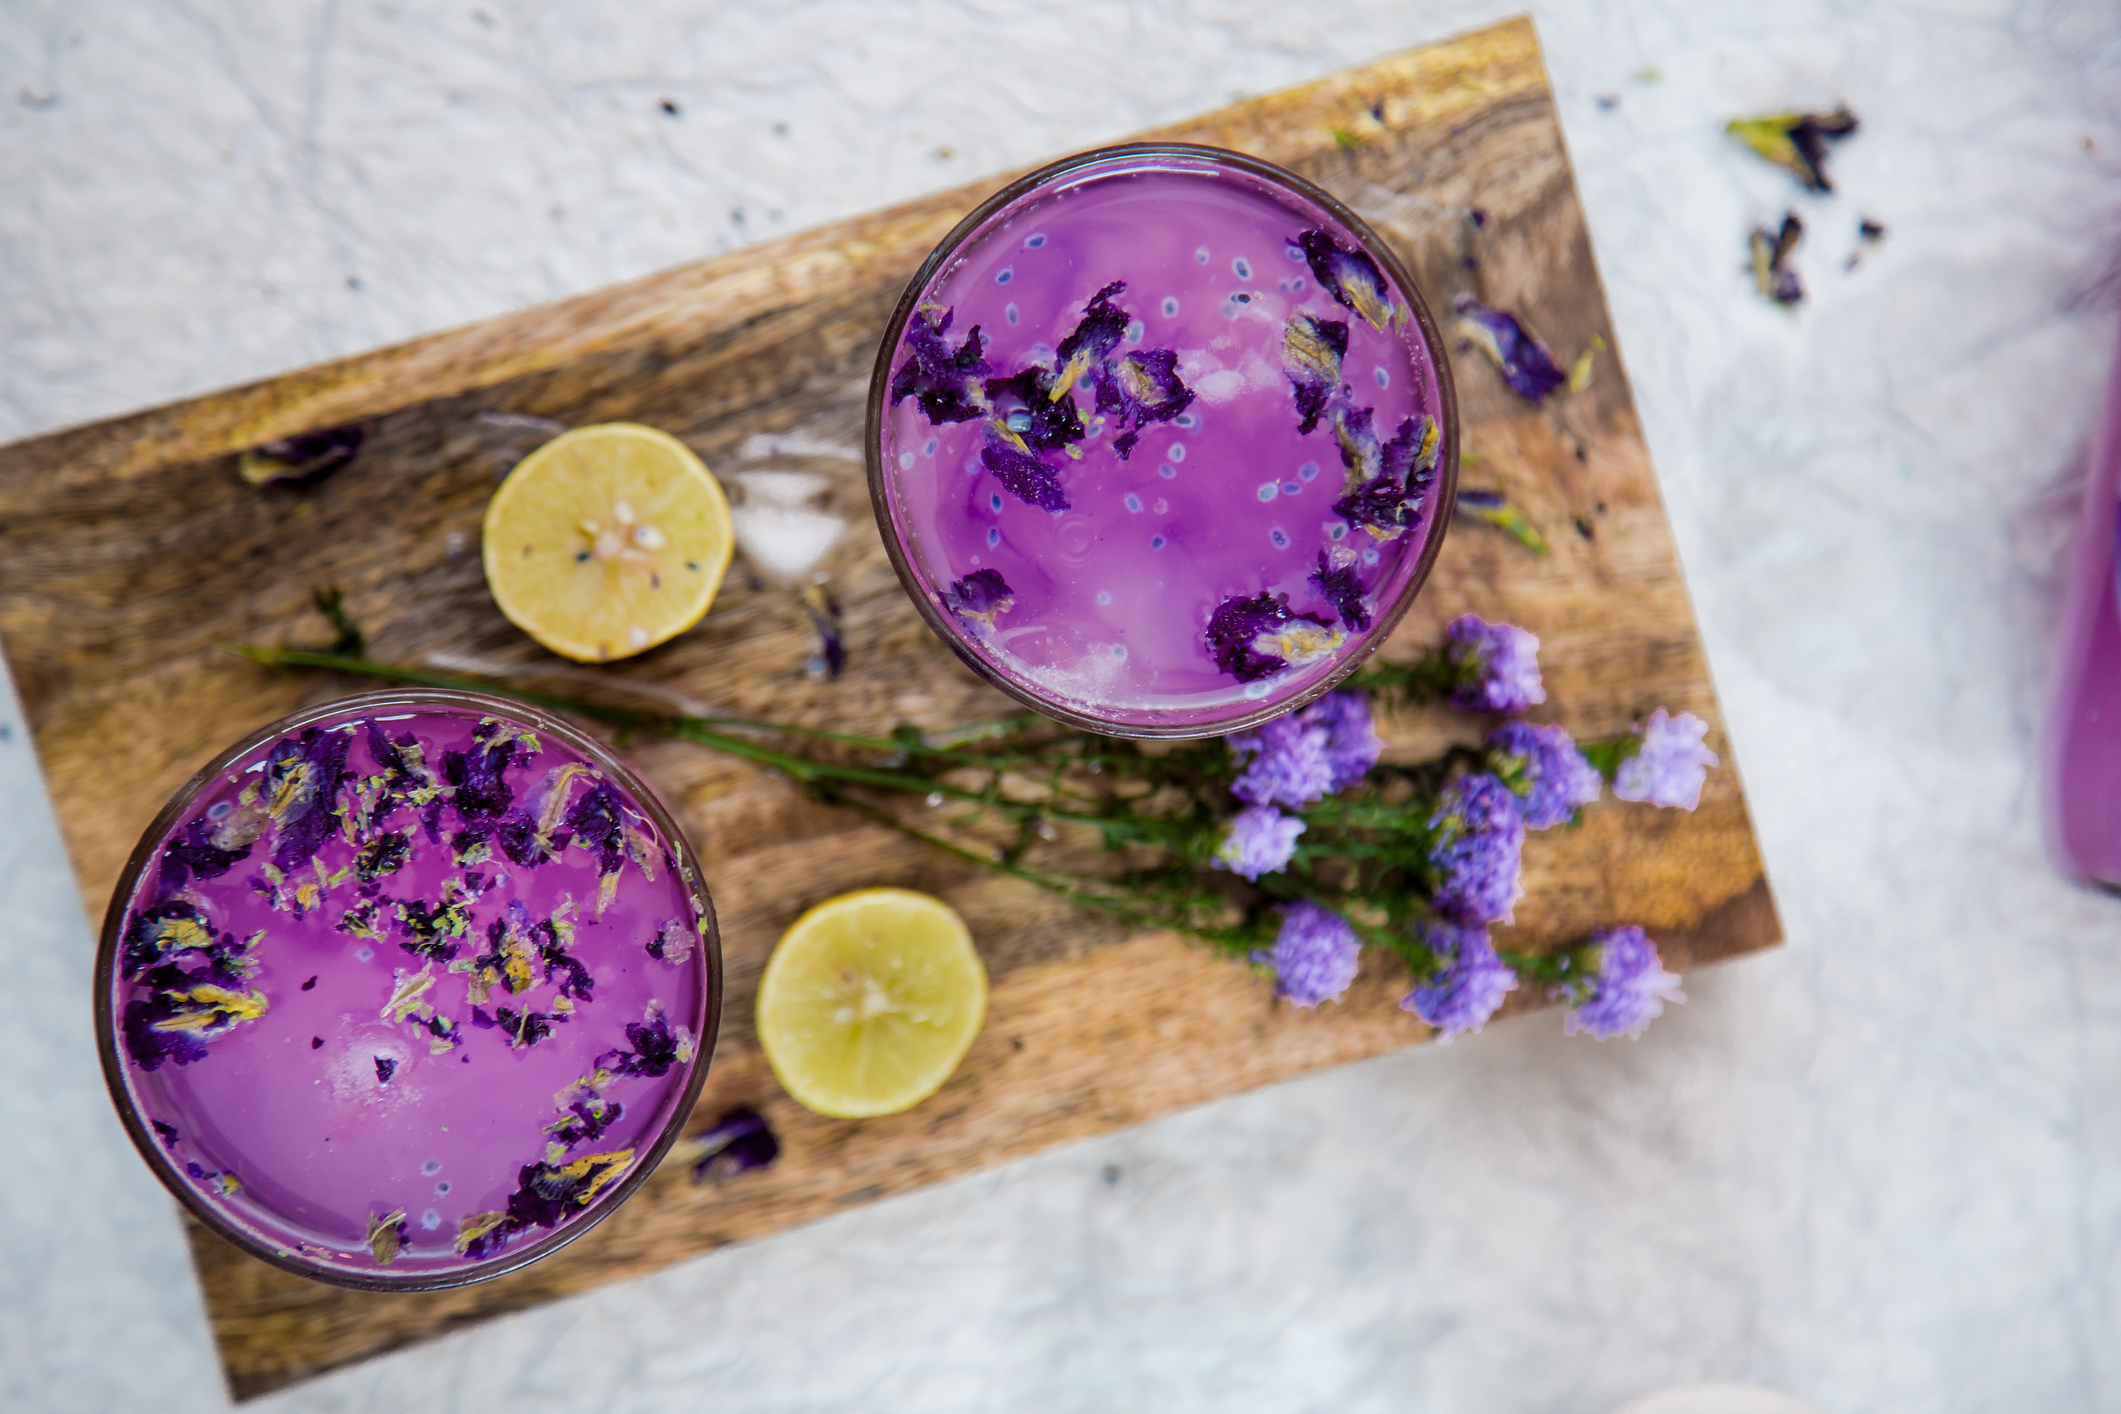 Fresh Lavender Drink with Lemon and Lavender Flowers. Cold Summer Violet Lemonade, Top View on a Wooden Board.